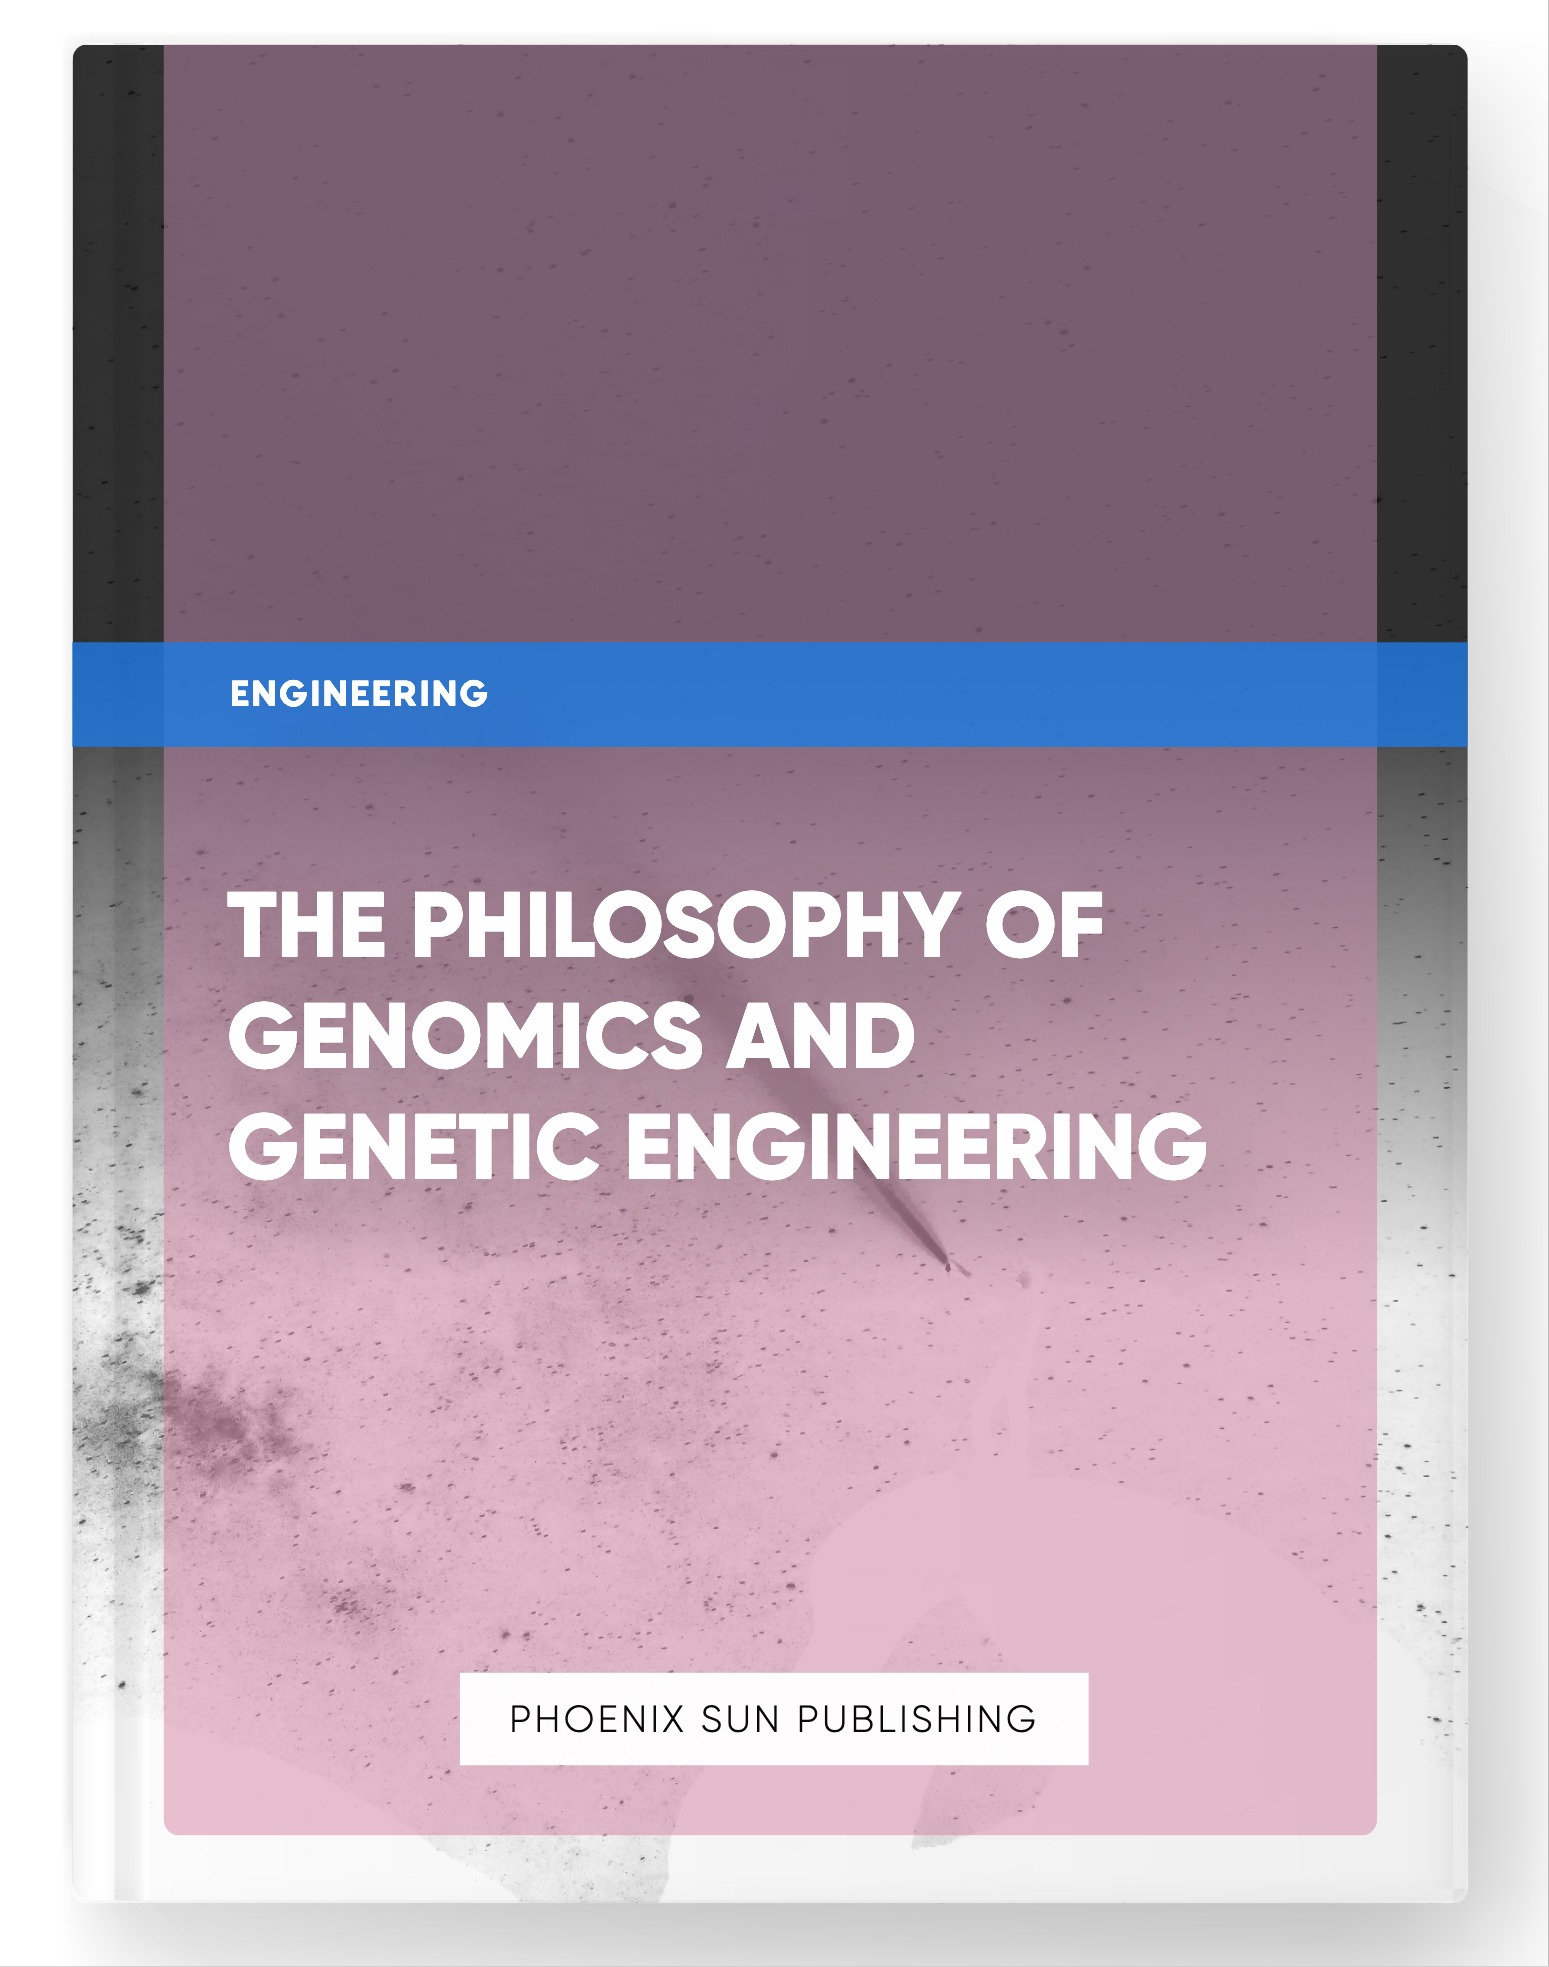 The Philosophy of Genomics and Genetic Engineering